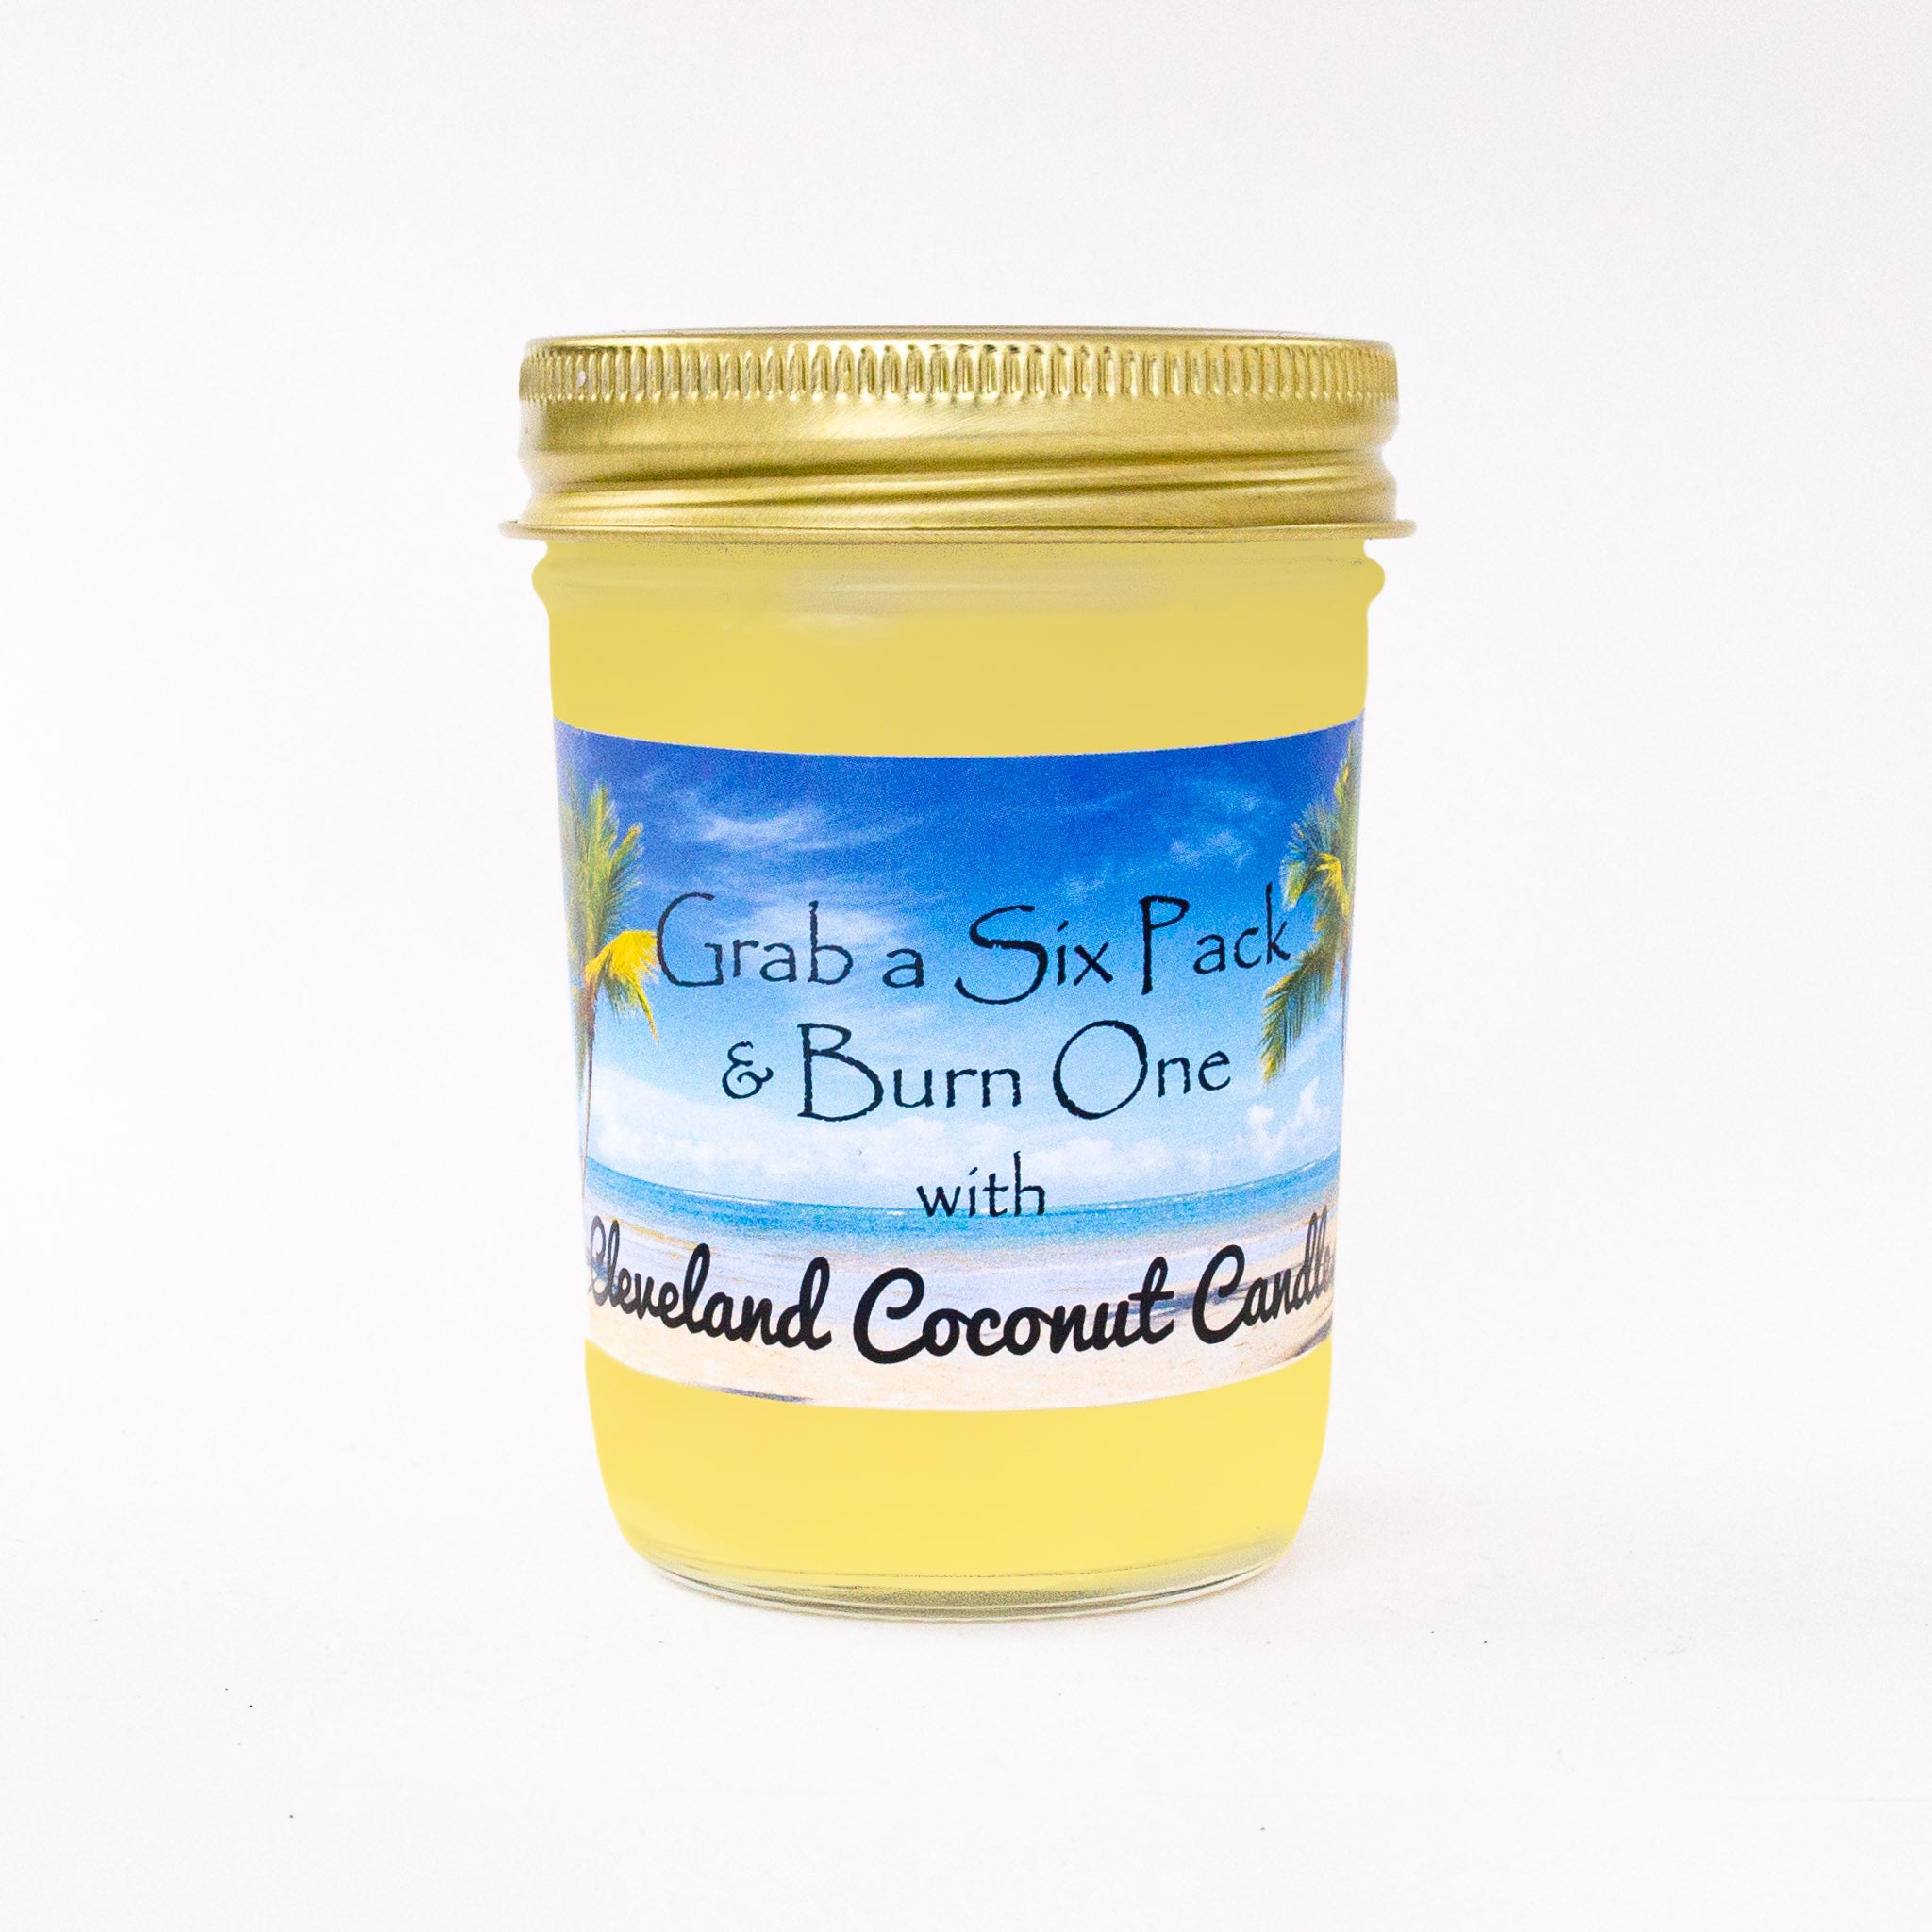 Jar Candle - Lemon Cake